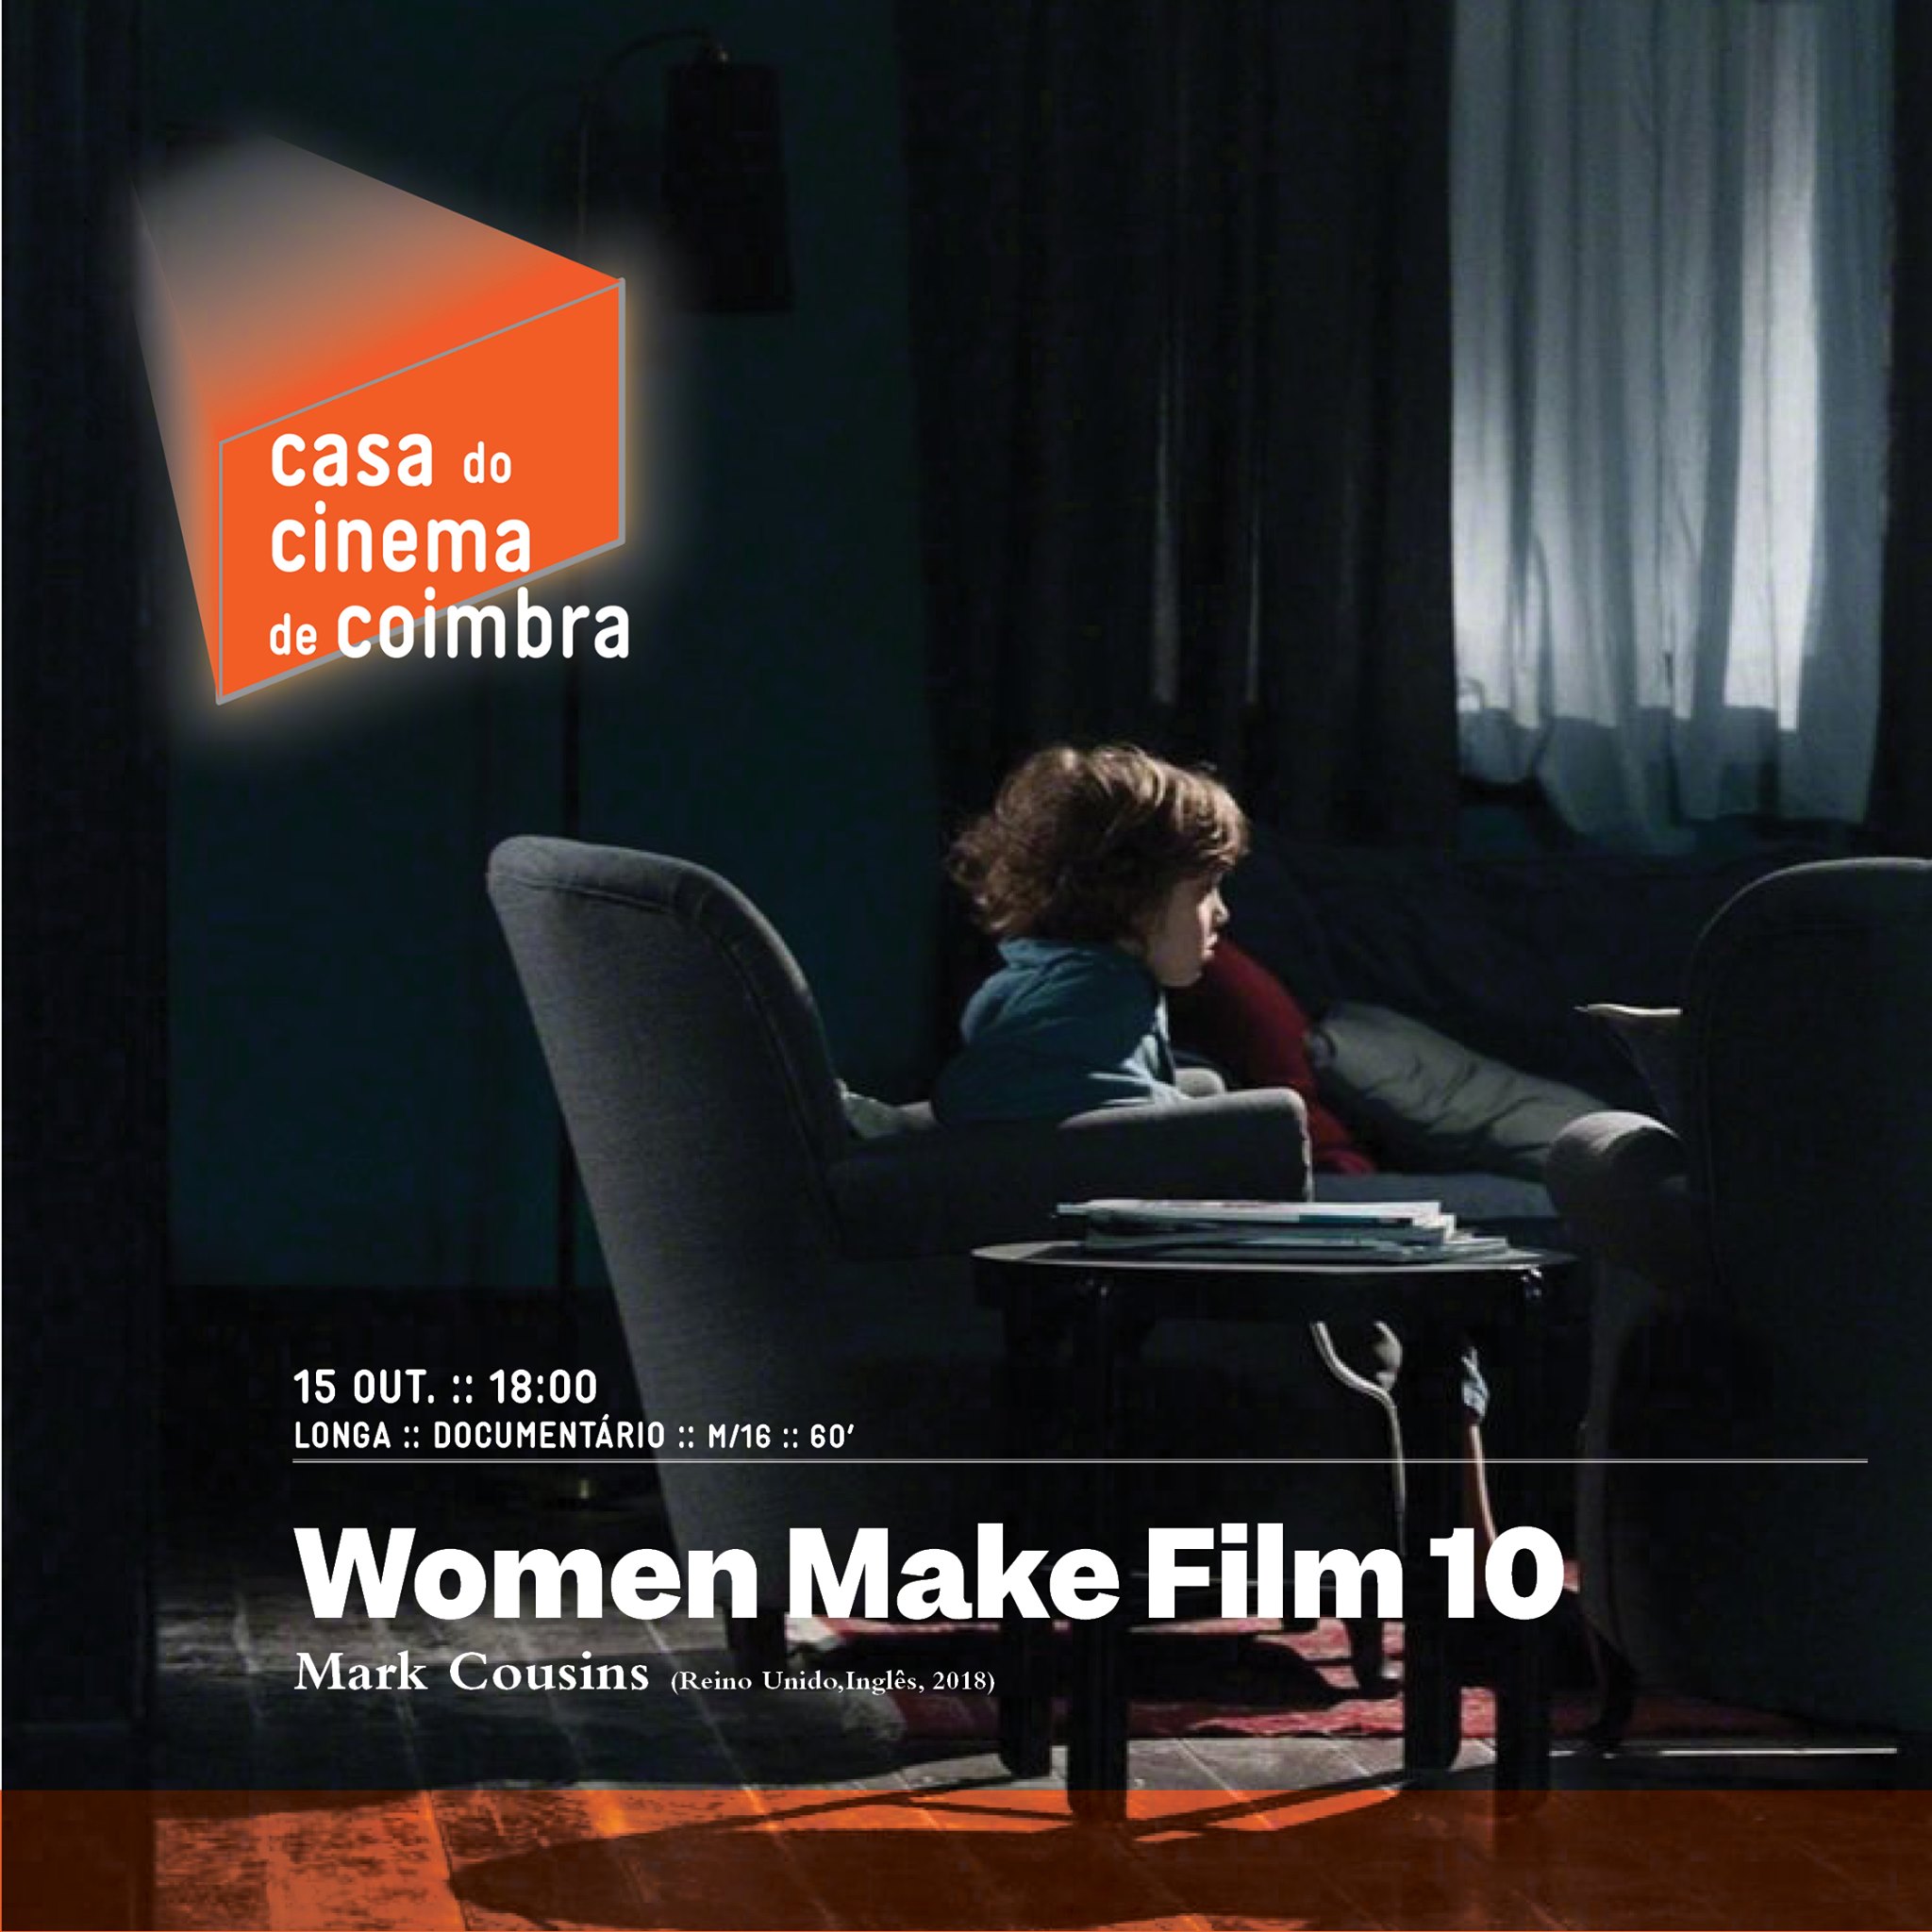 WOMEN MAKE FILM 10